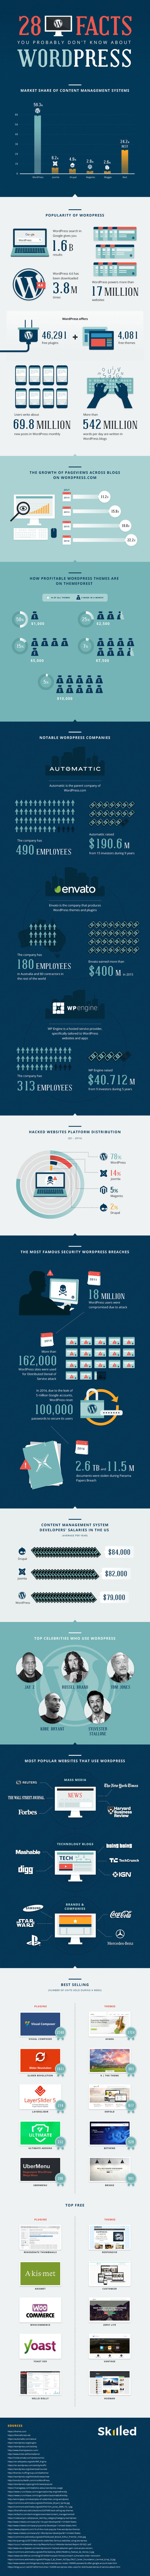 wordpress facts infographic